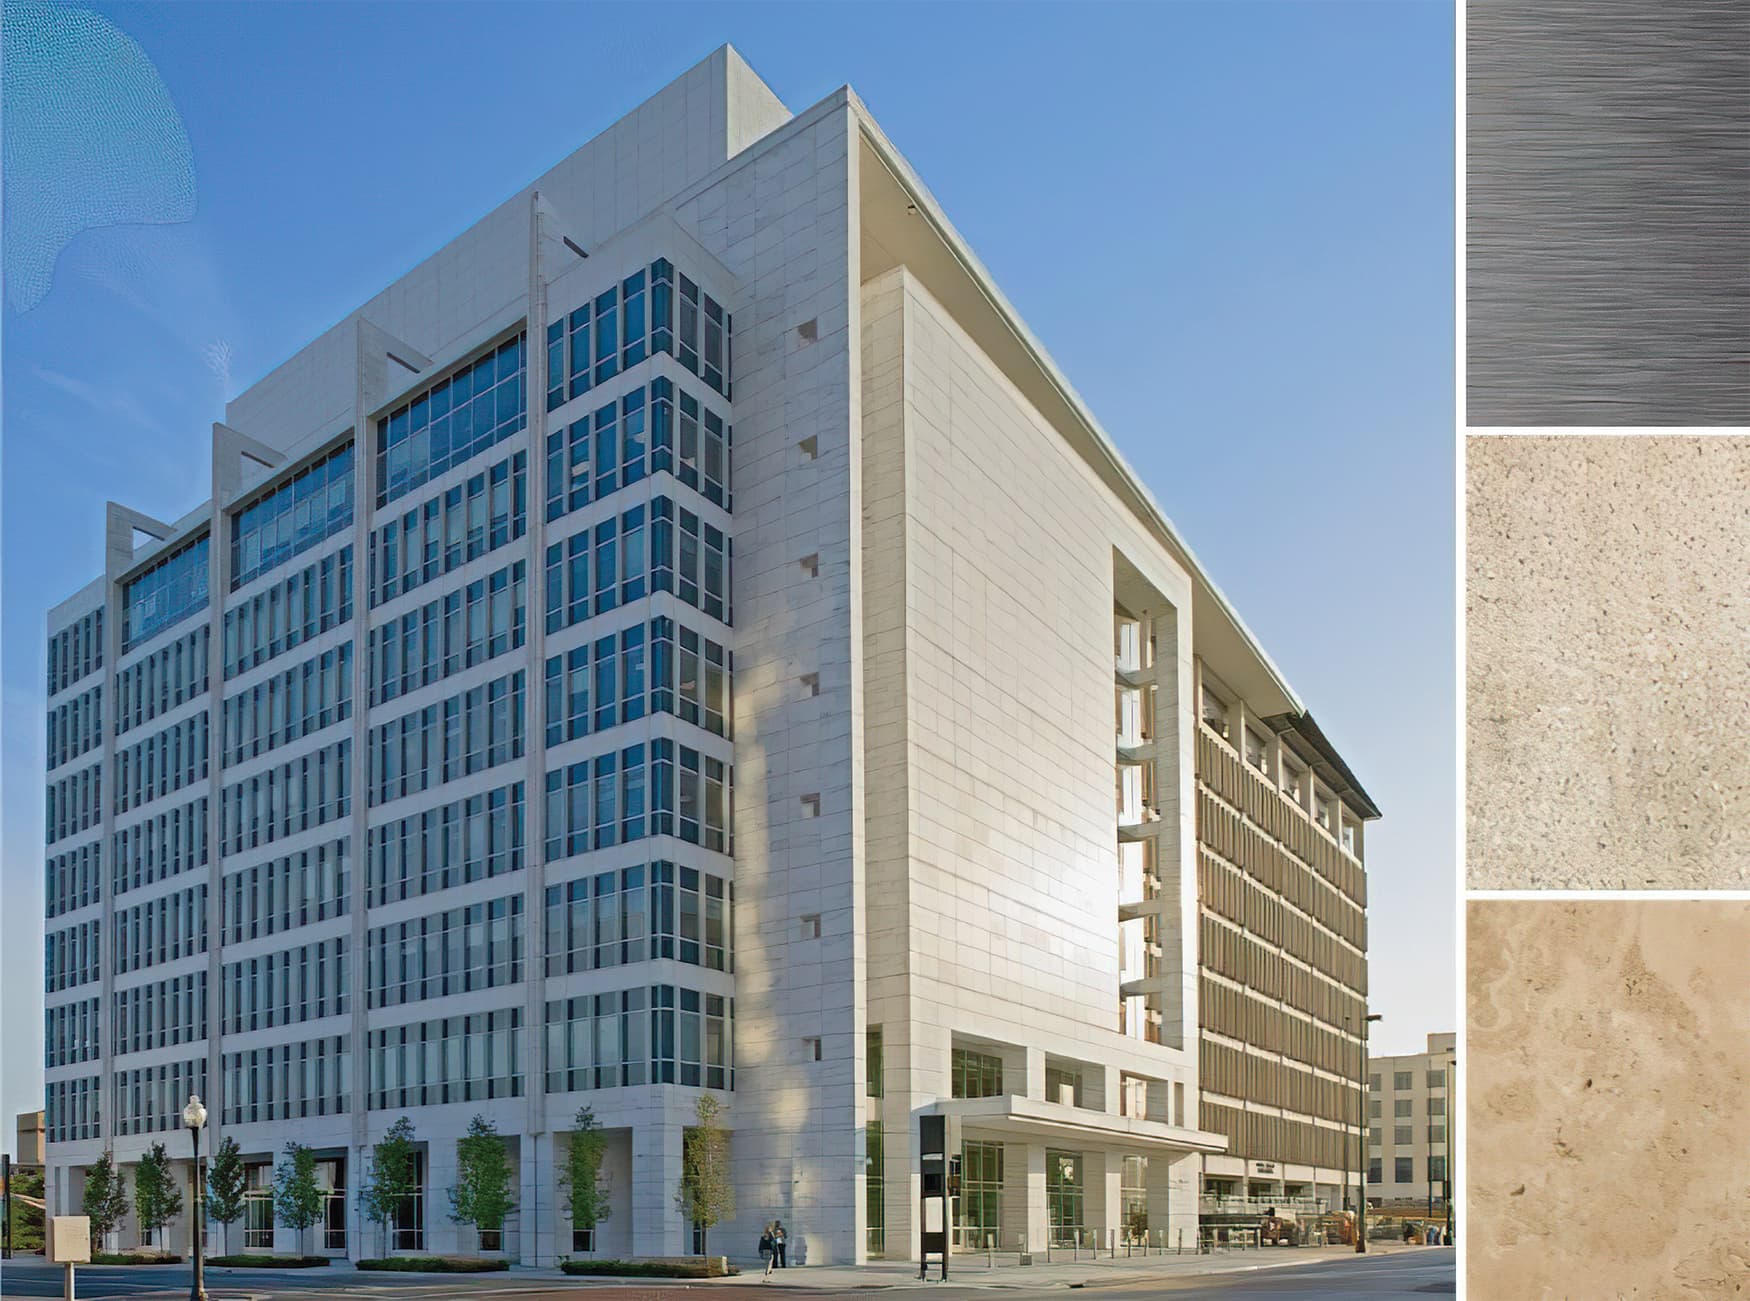 George L. Allen Sr. Courts Building. Civic Design, Workplace Design. Dallas, Texas. 